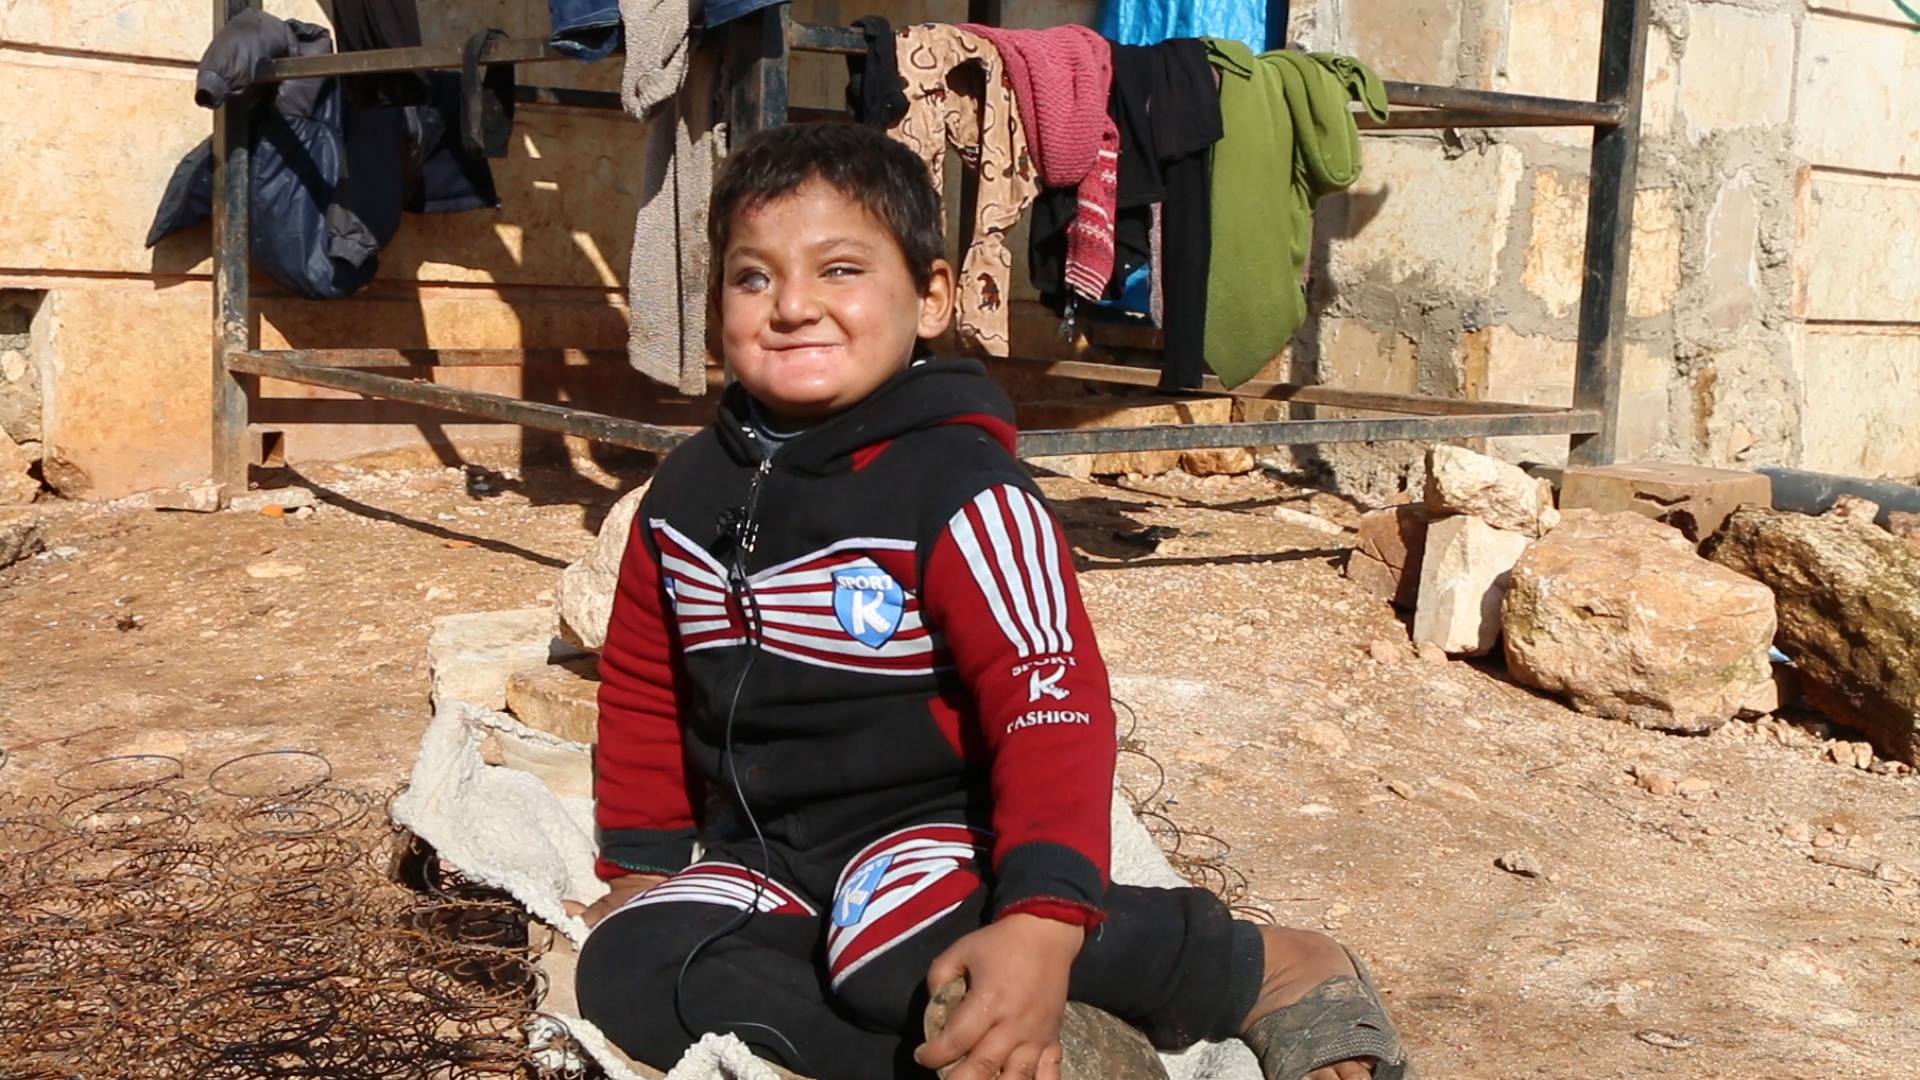 مرض مجهول يفتك بجسد طفل سوري